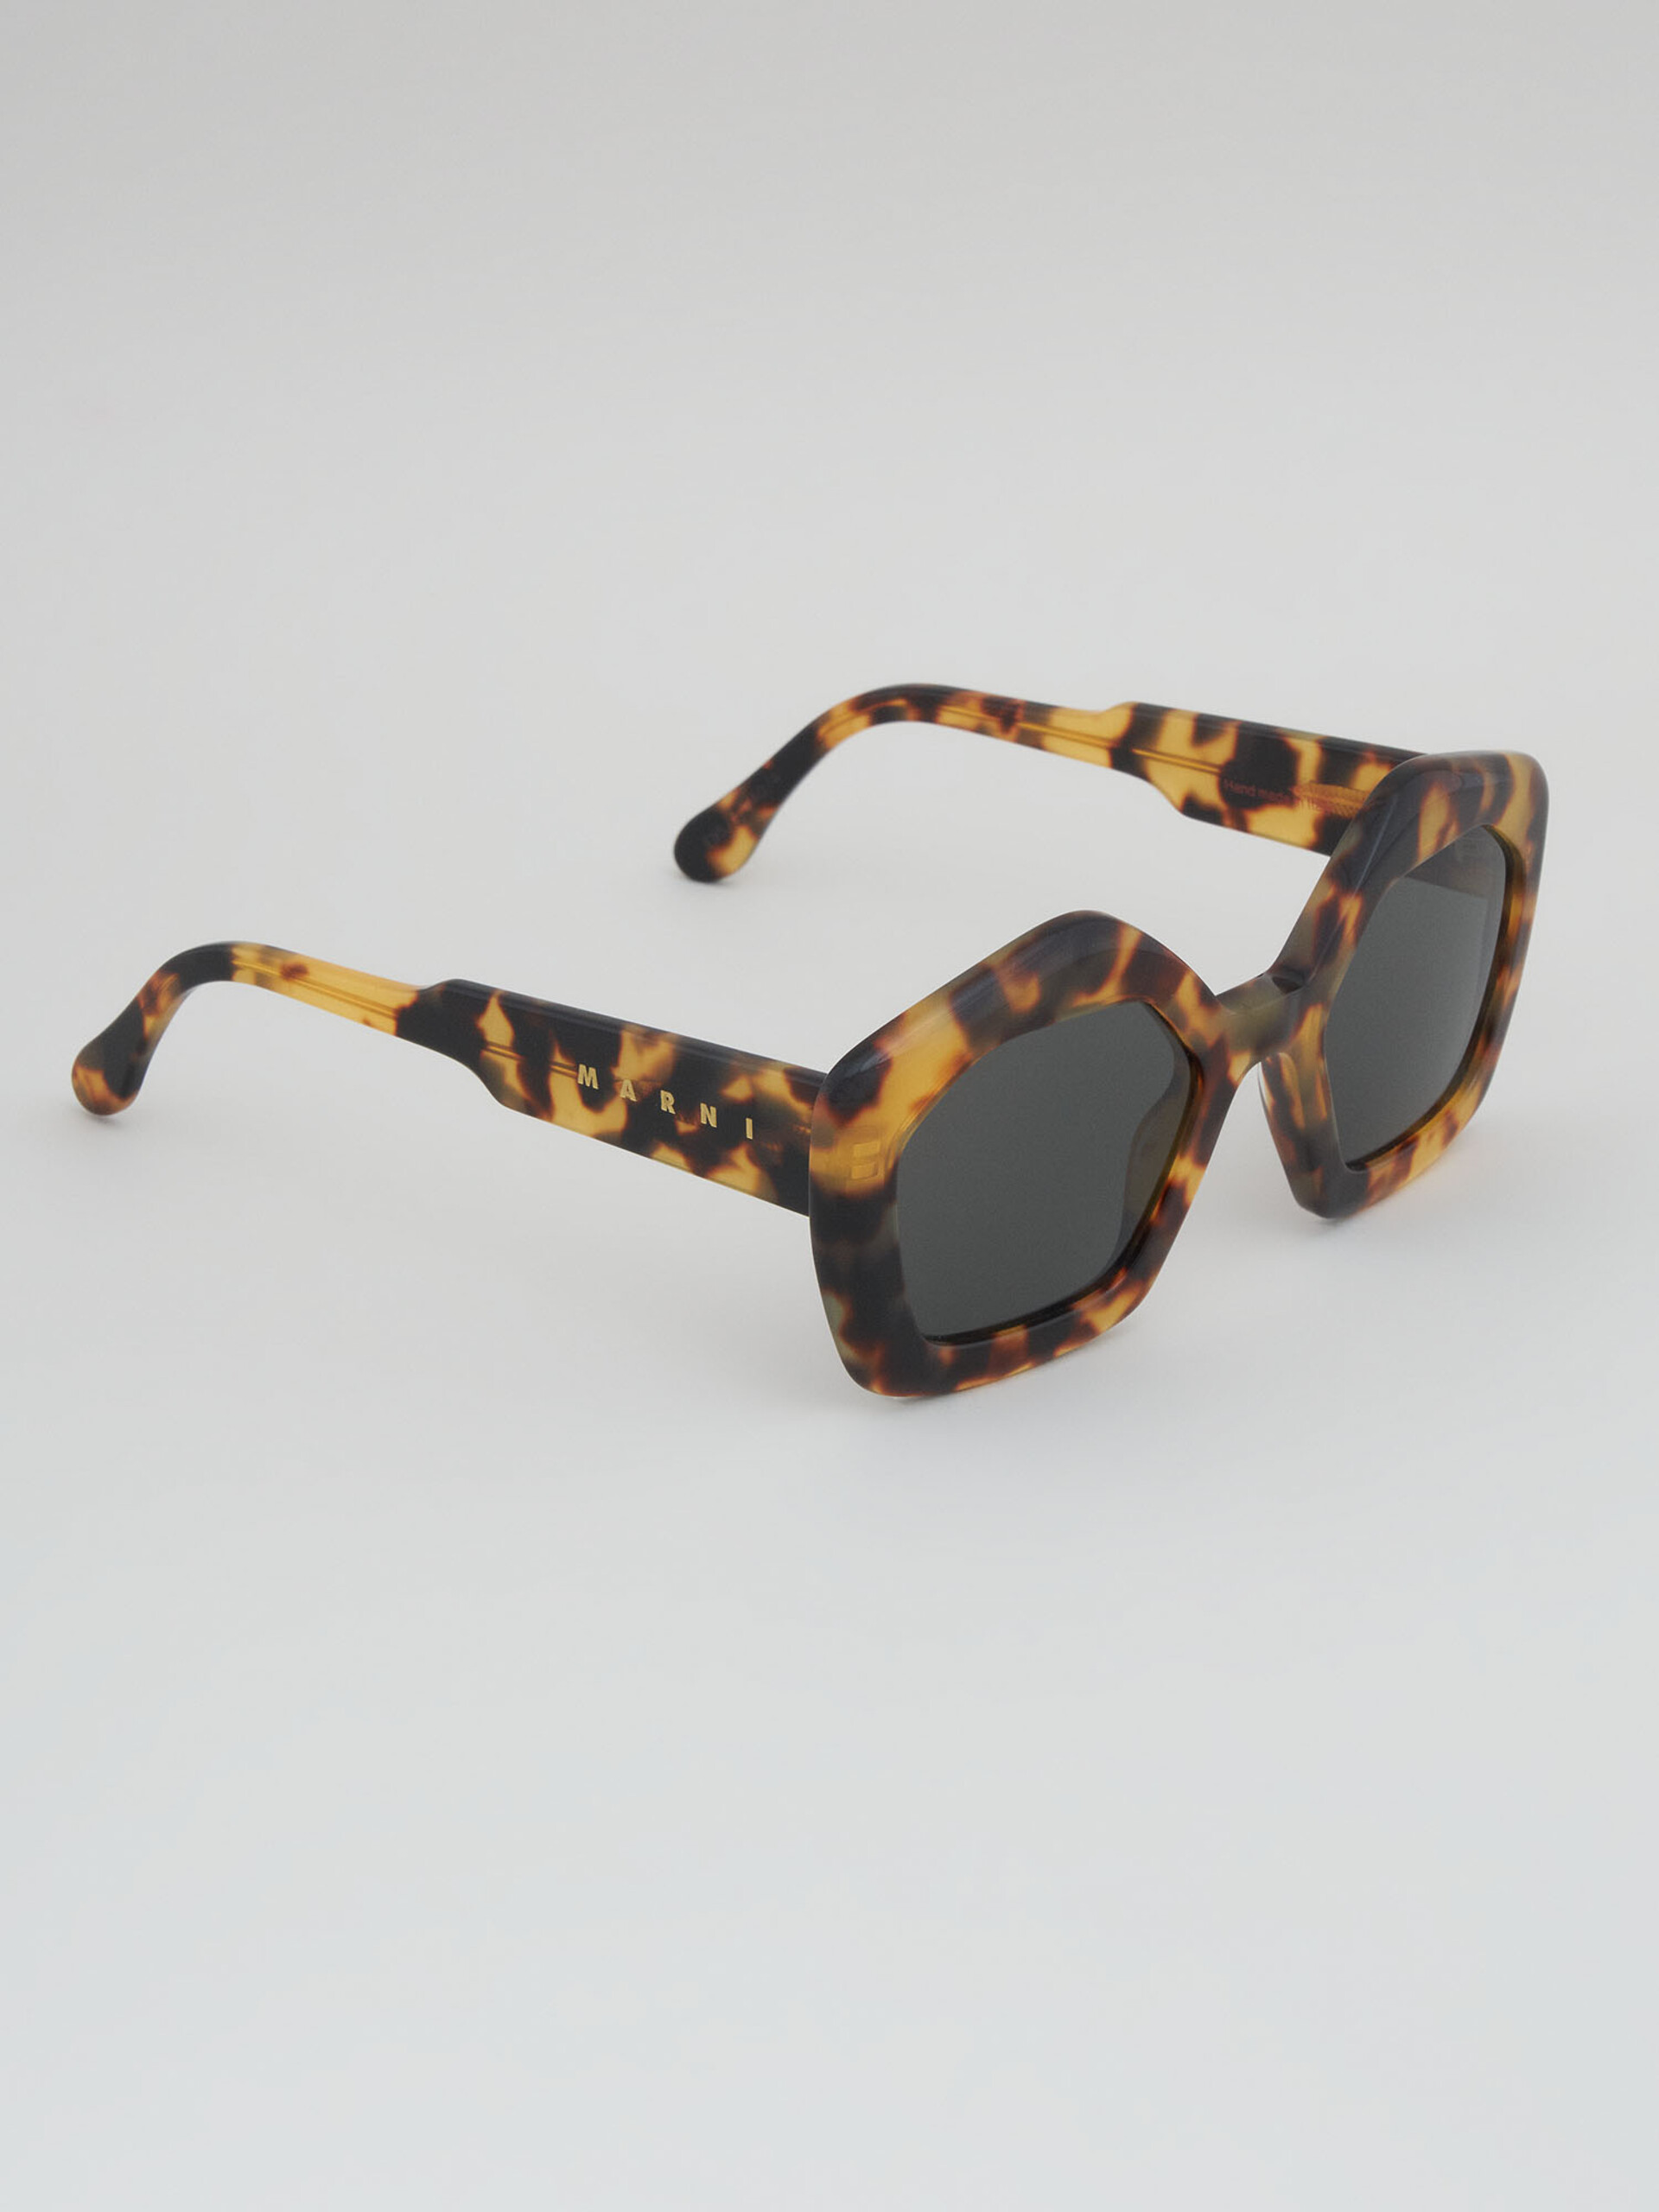 Tortoiseshell acetate LAUGHING WATERS sunglasses - Optical - Image 2